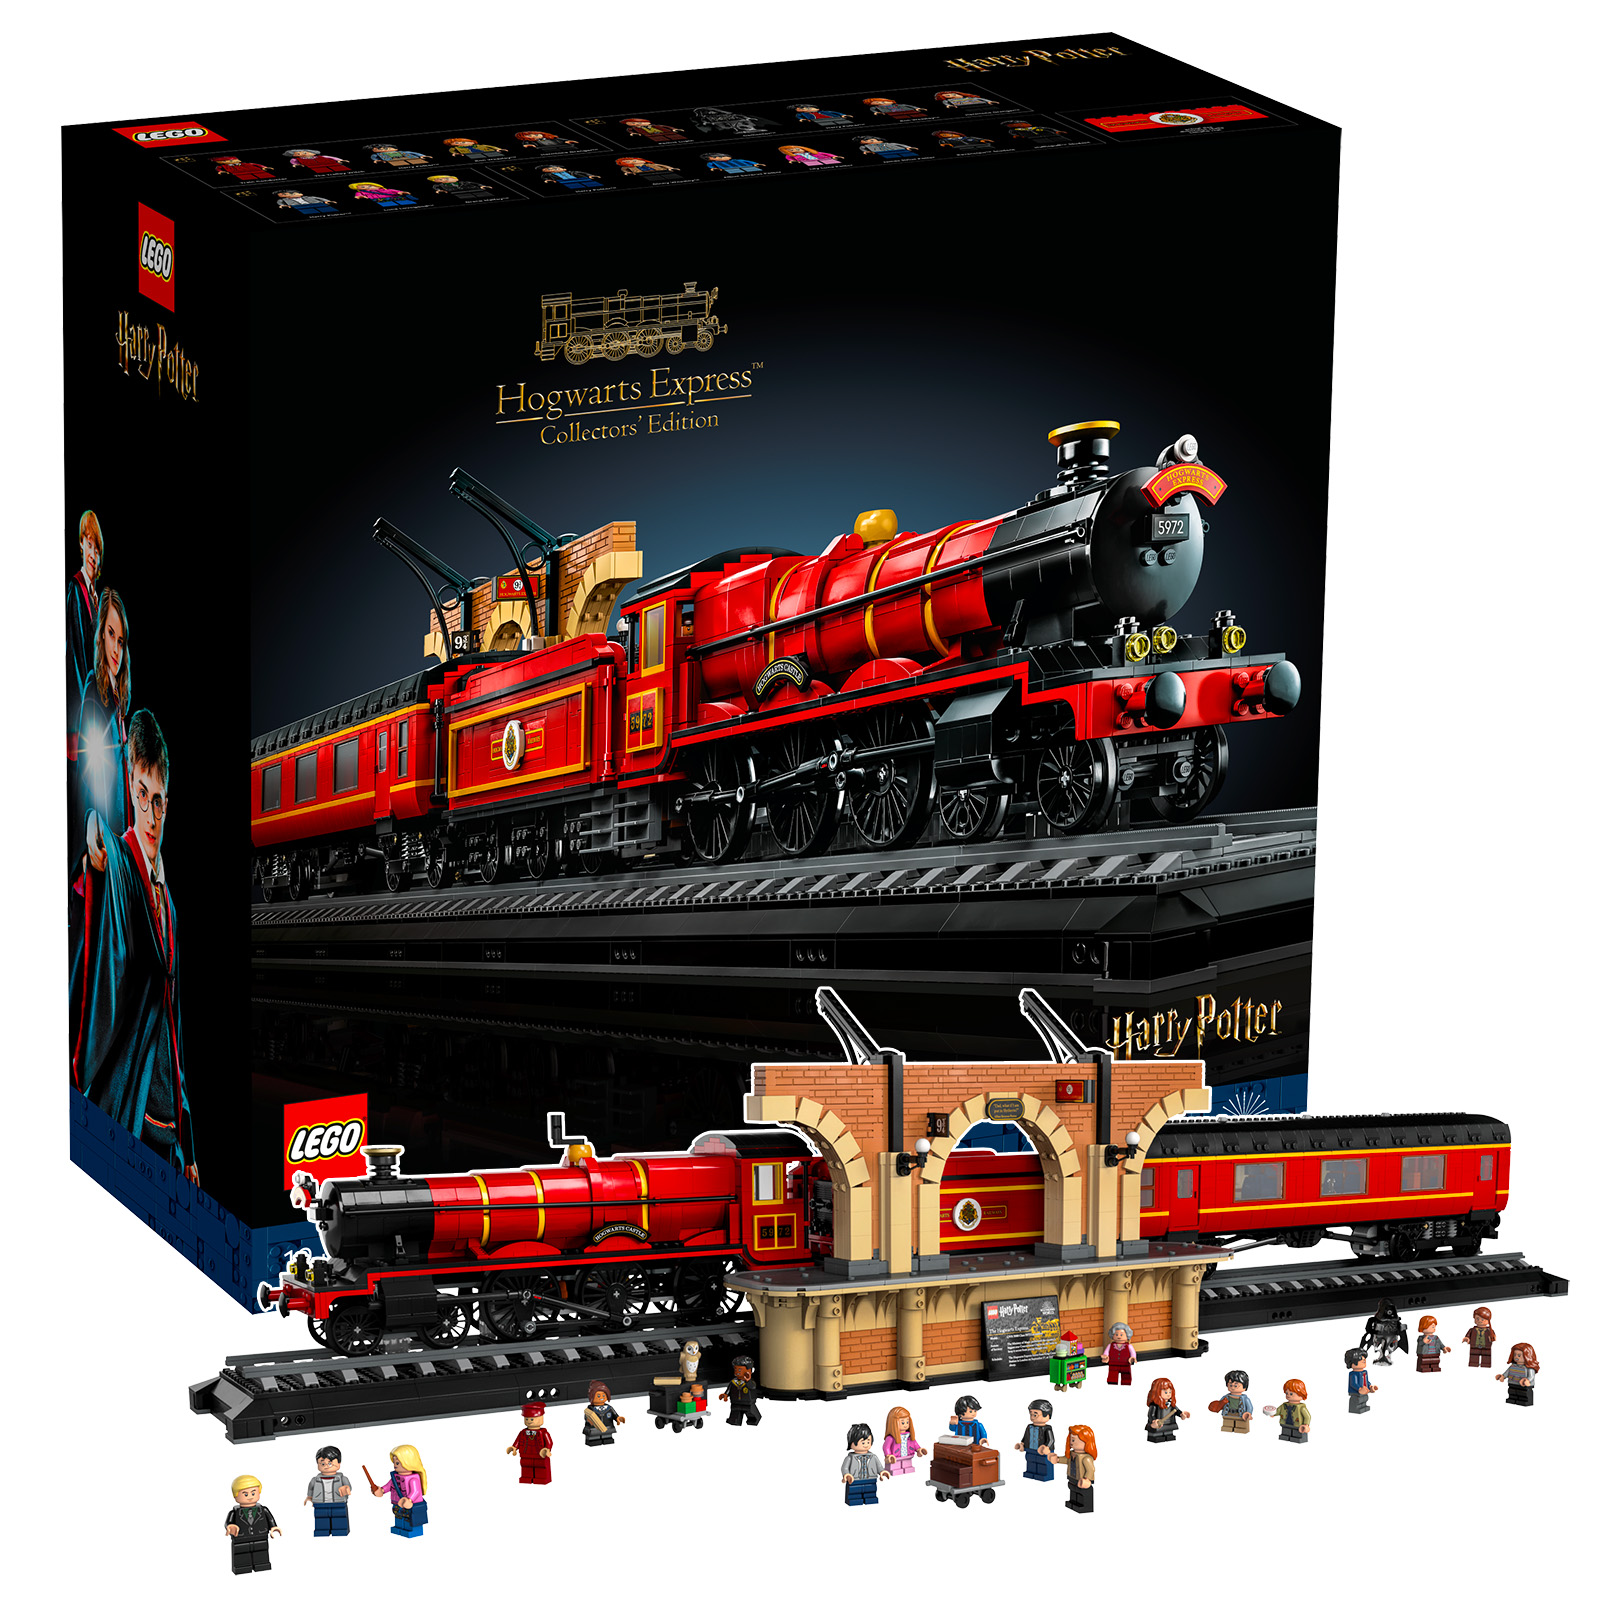 W sklepie LEGO: Zestaw LEGO Harry Potter 76405 Hogwarts Express Collector's Edition jest online